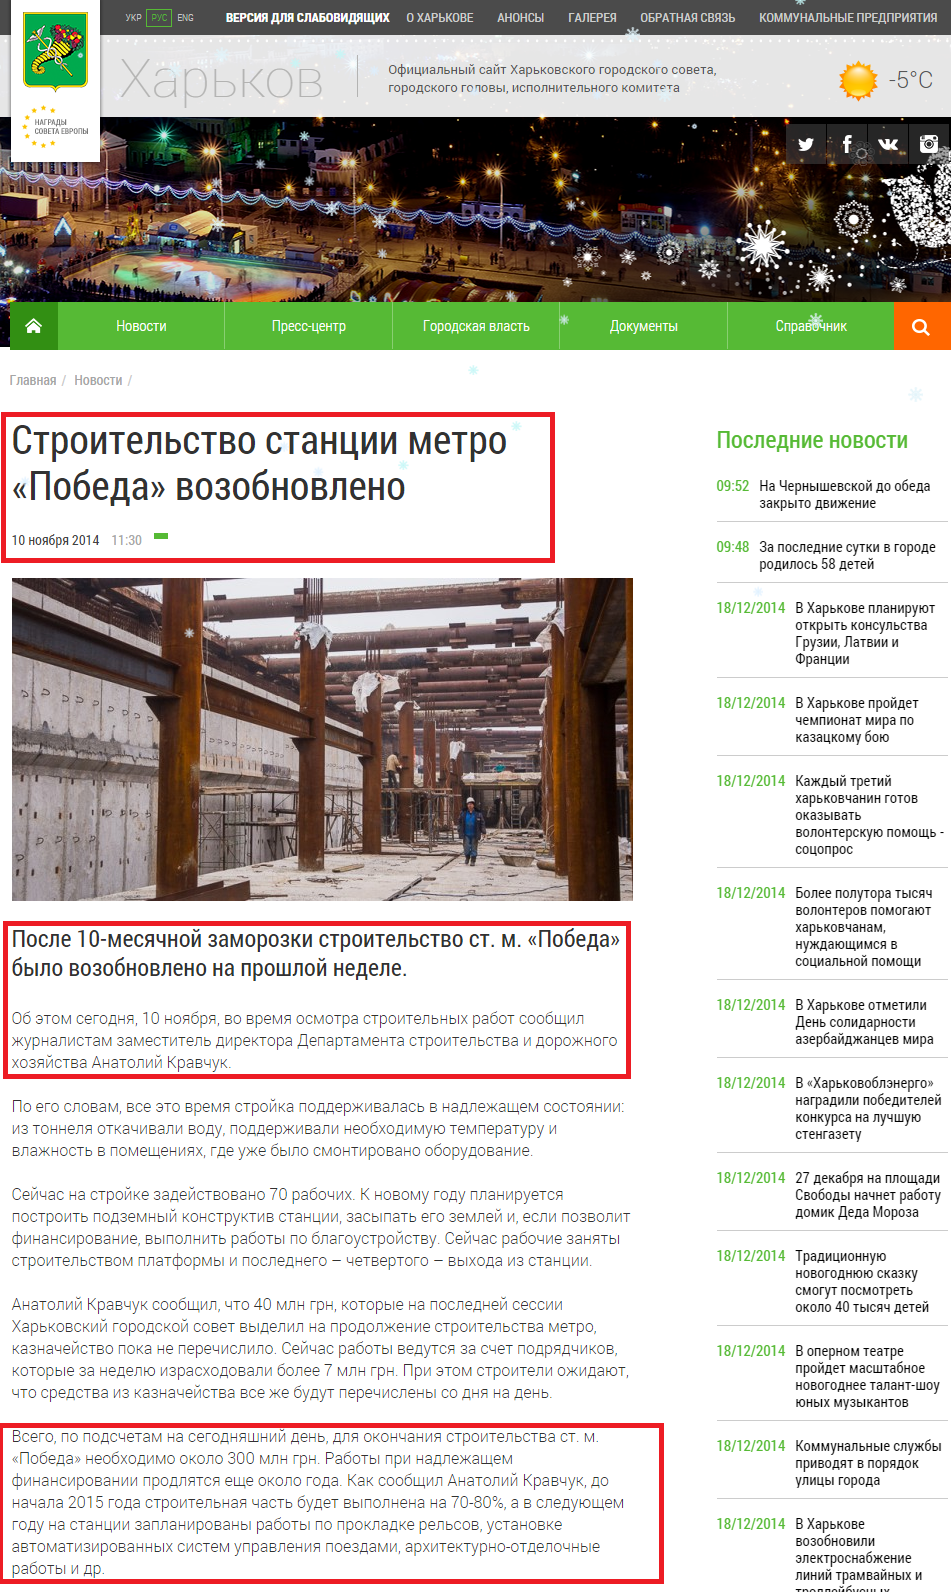 http://www.city.kharkov.ua/ru/news/-26026.html